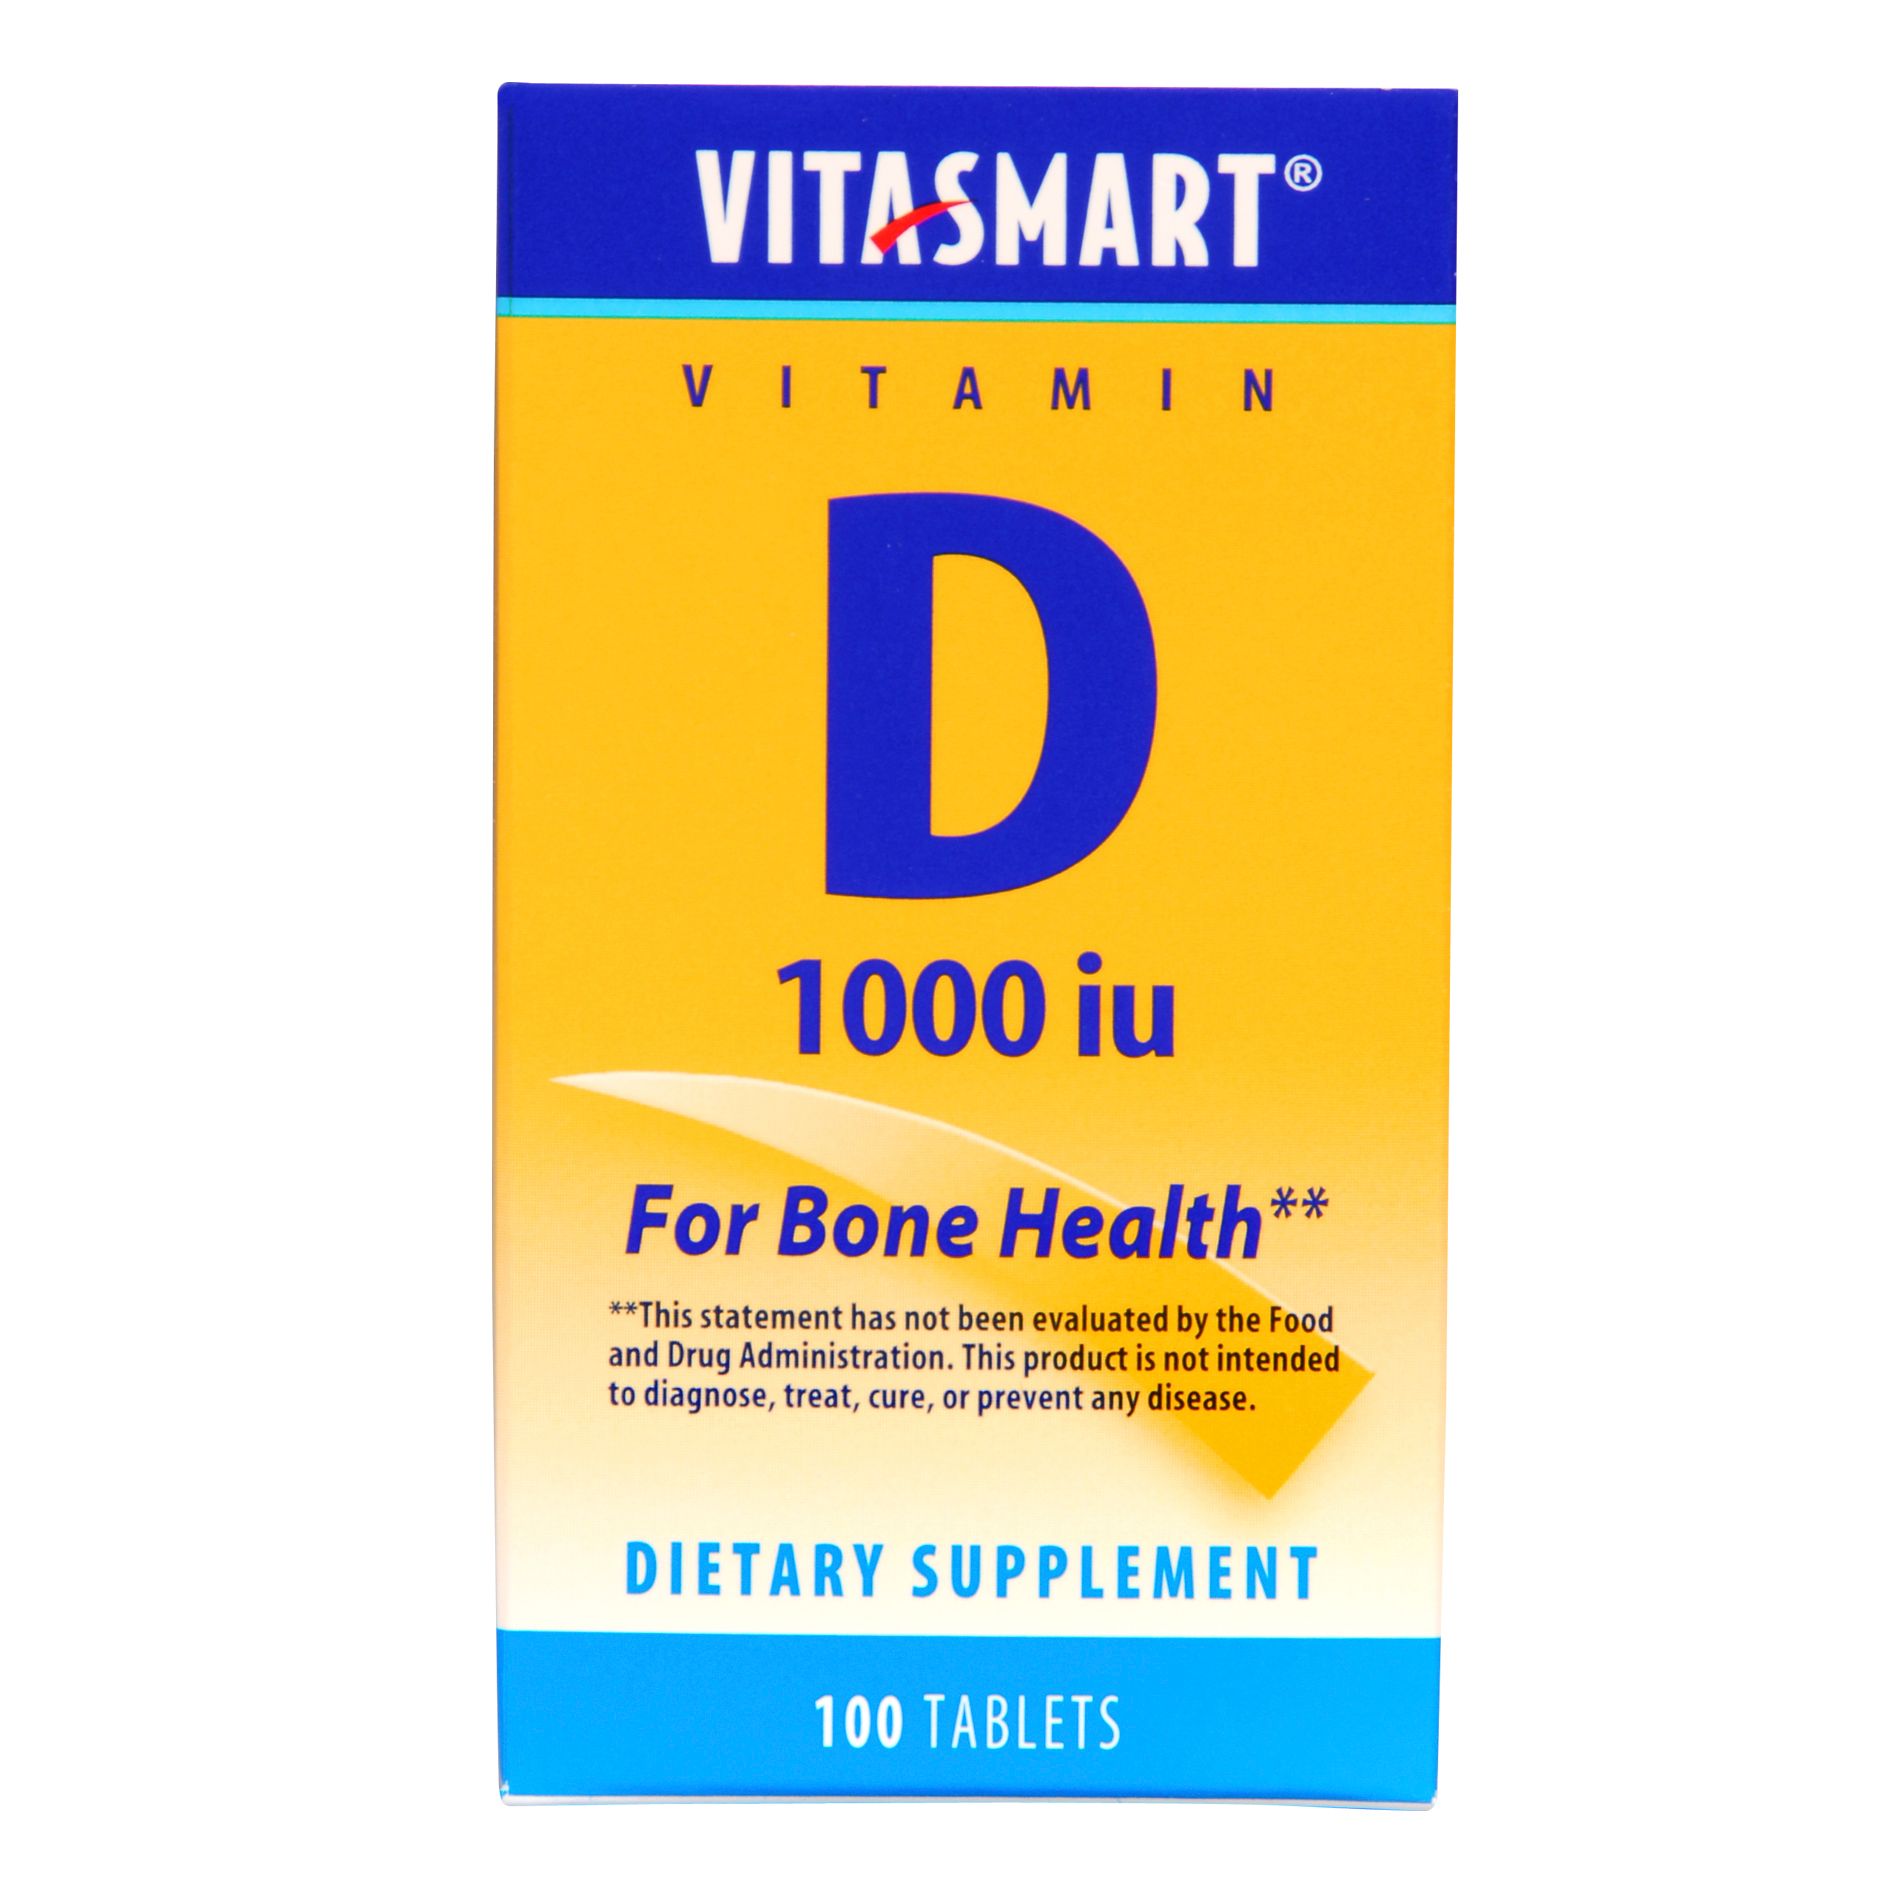 VitaSmart Vitamin D For Bone Health Dietary Supplement 1000 IU Tablets 100 Count